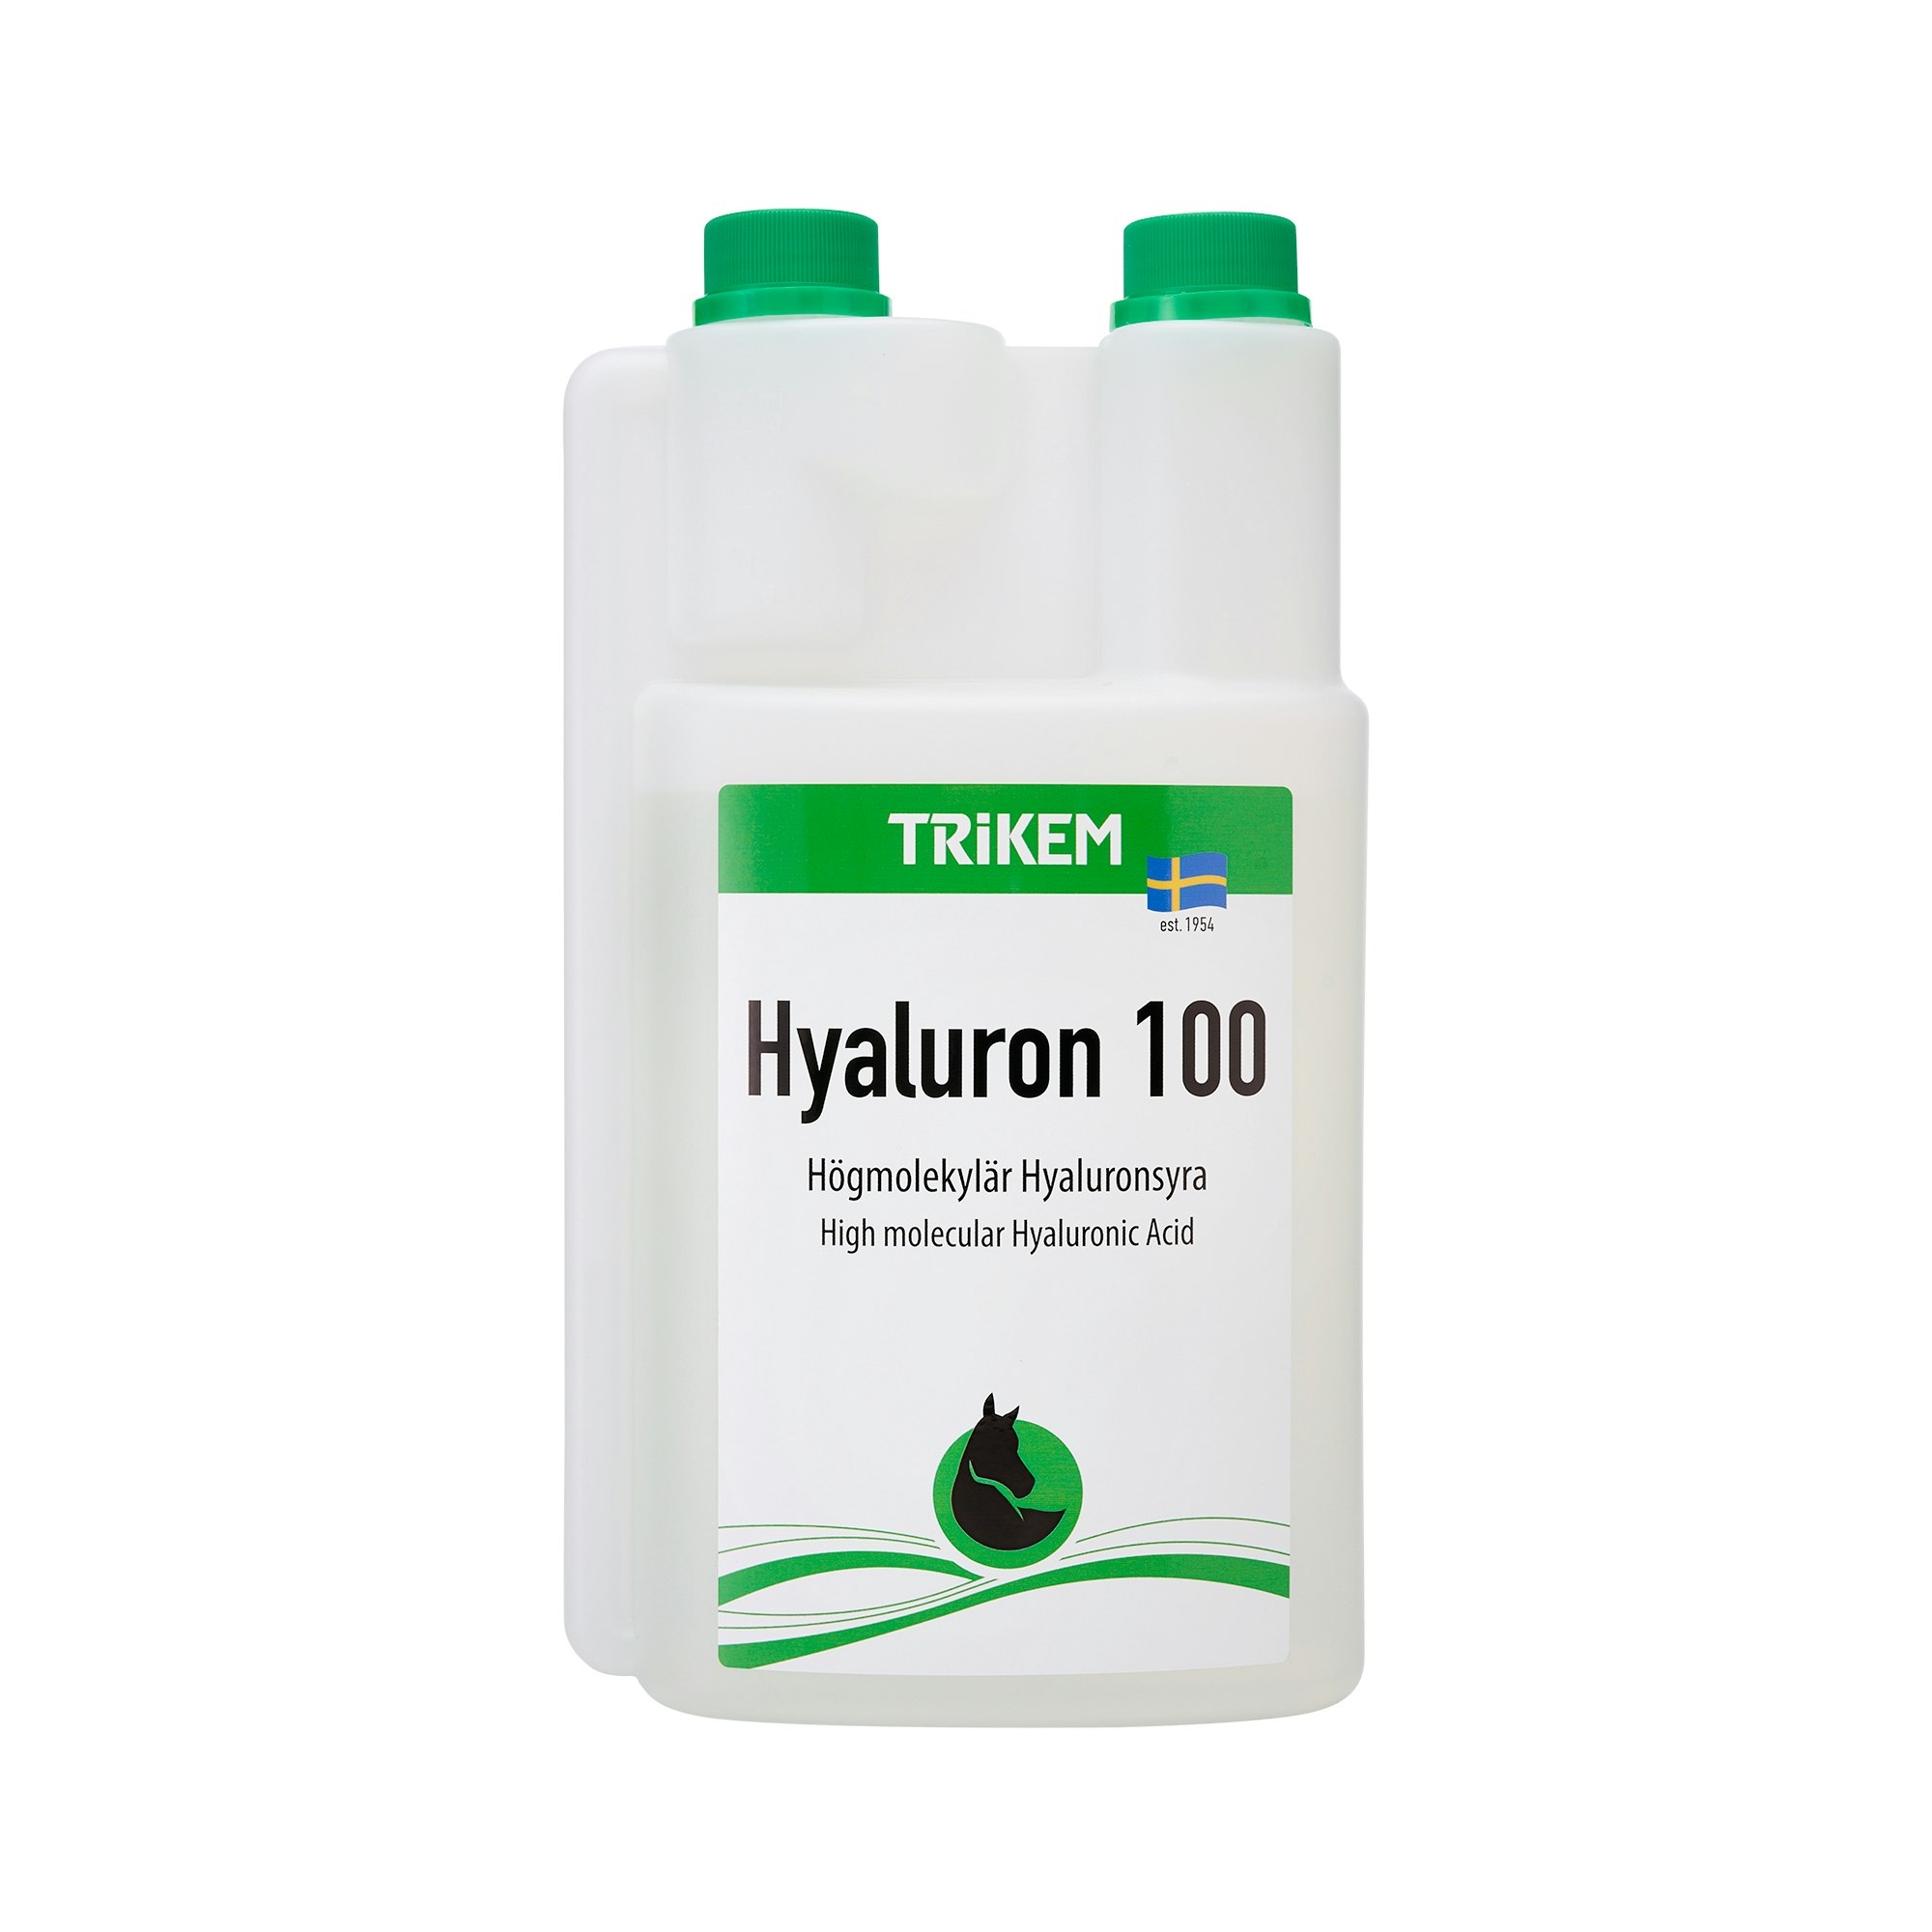 Trikem Hyaluron 100 - hyaluronsyra - Ekeberga Gård